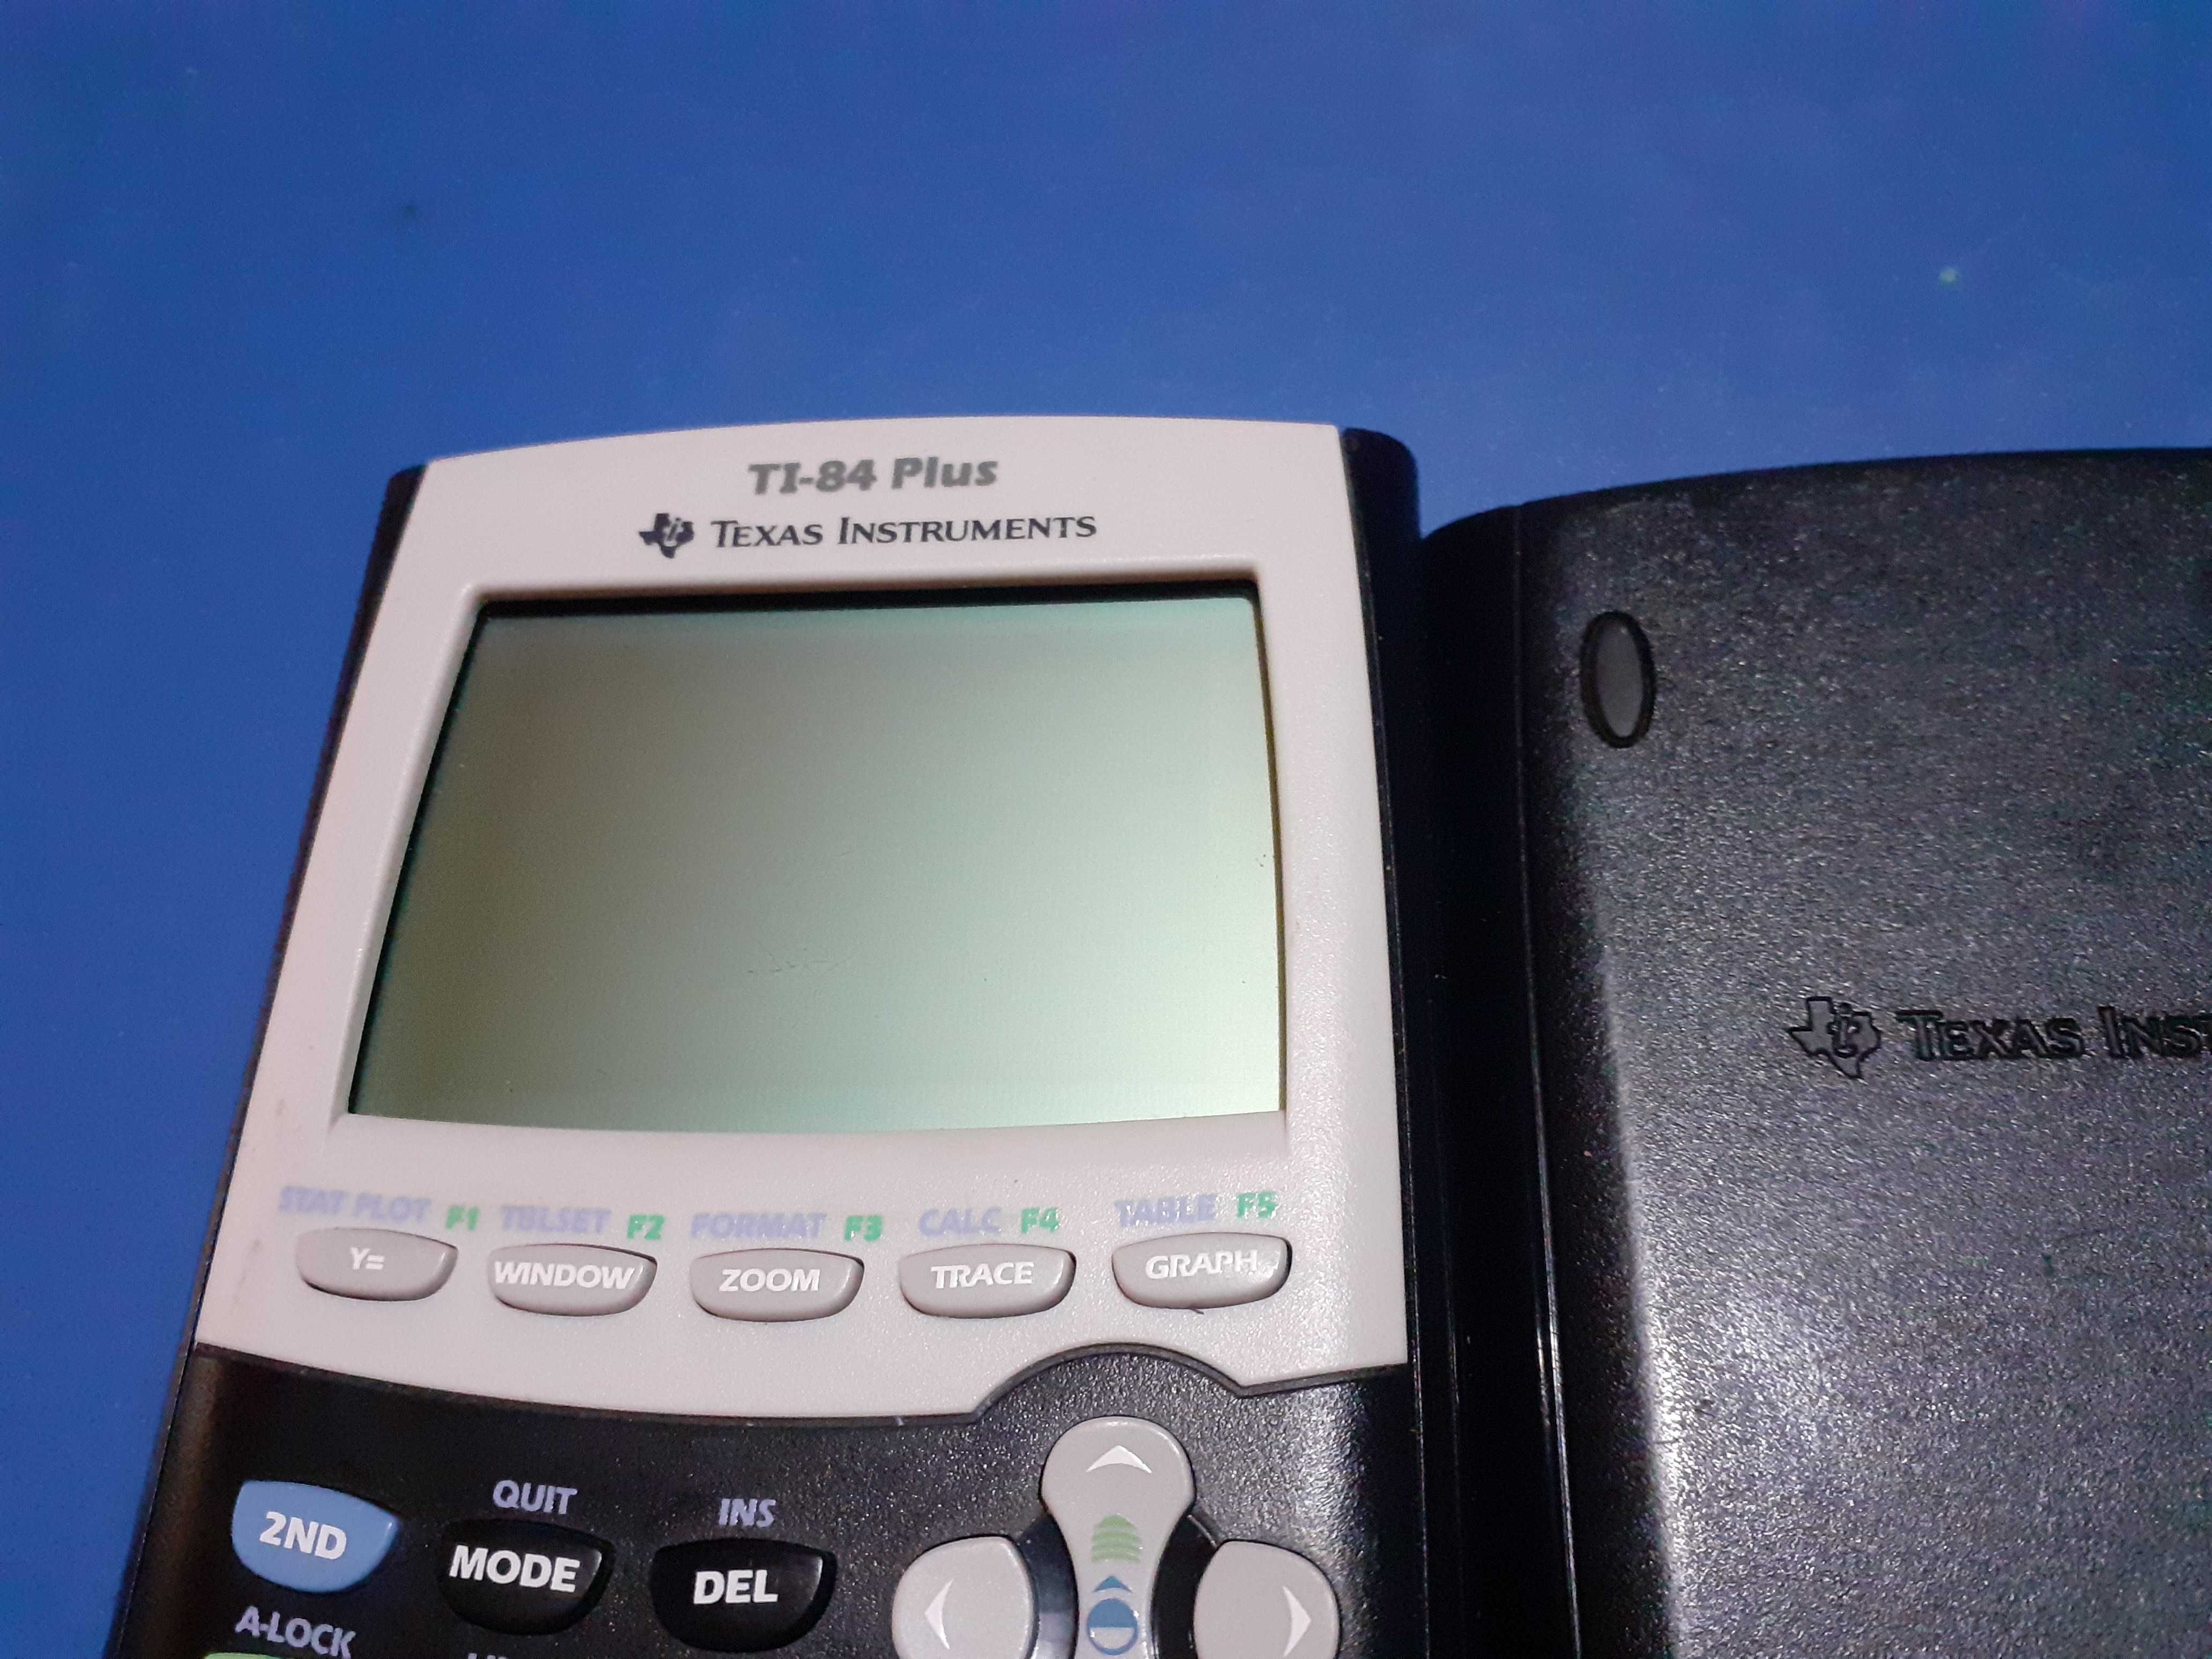 Calculator de birou Texas Instruments GRAFIC TI-84 Plus